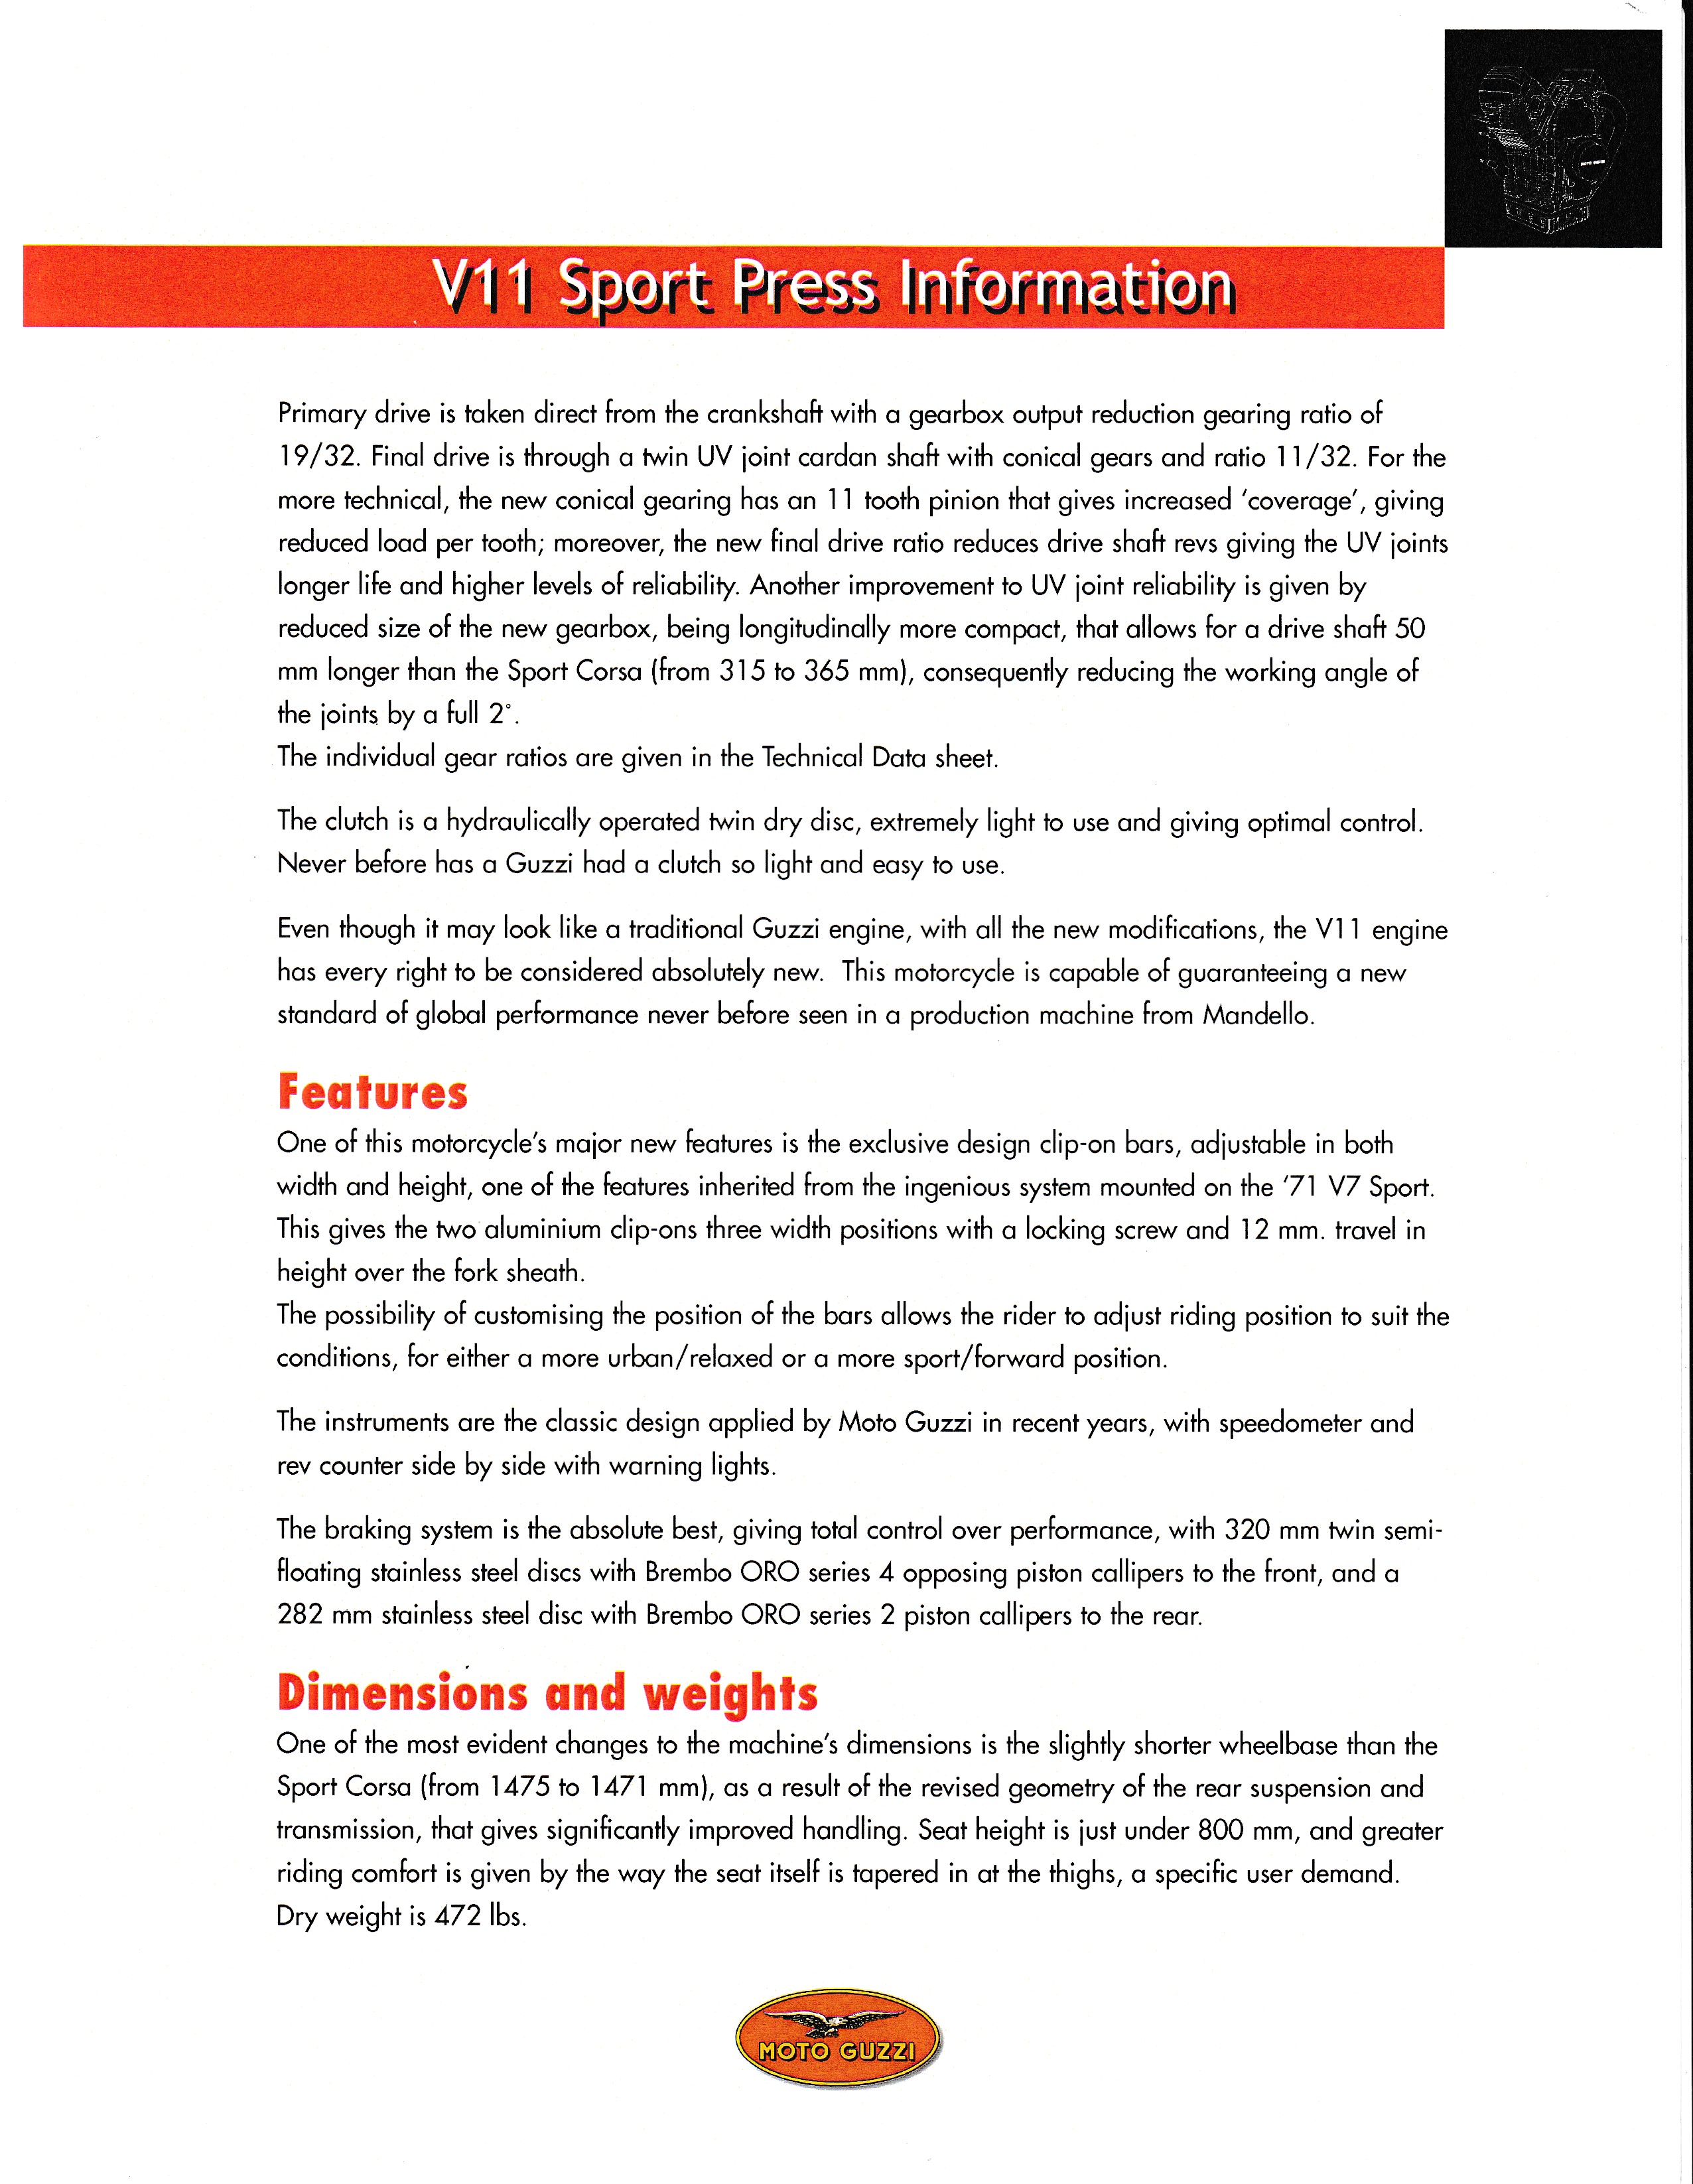 Press release - Moto Guzzi V11 Sport press kit and test bike scheduling (2000 June 07)